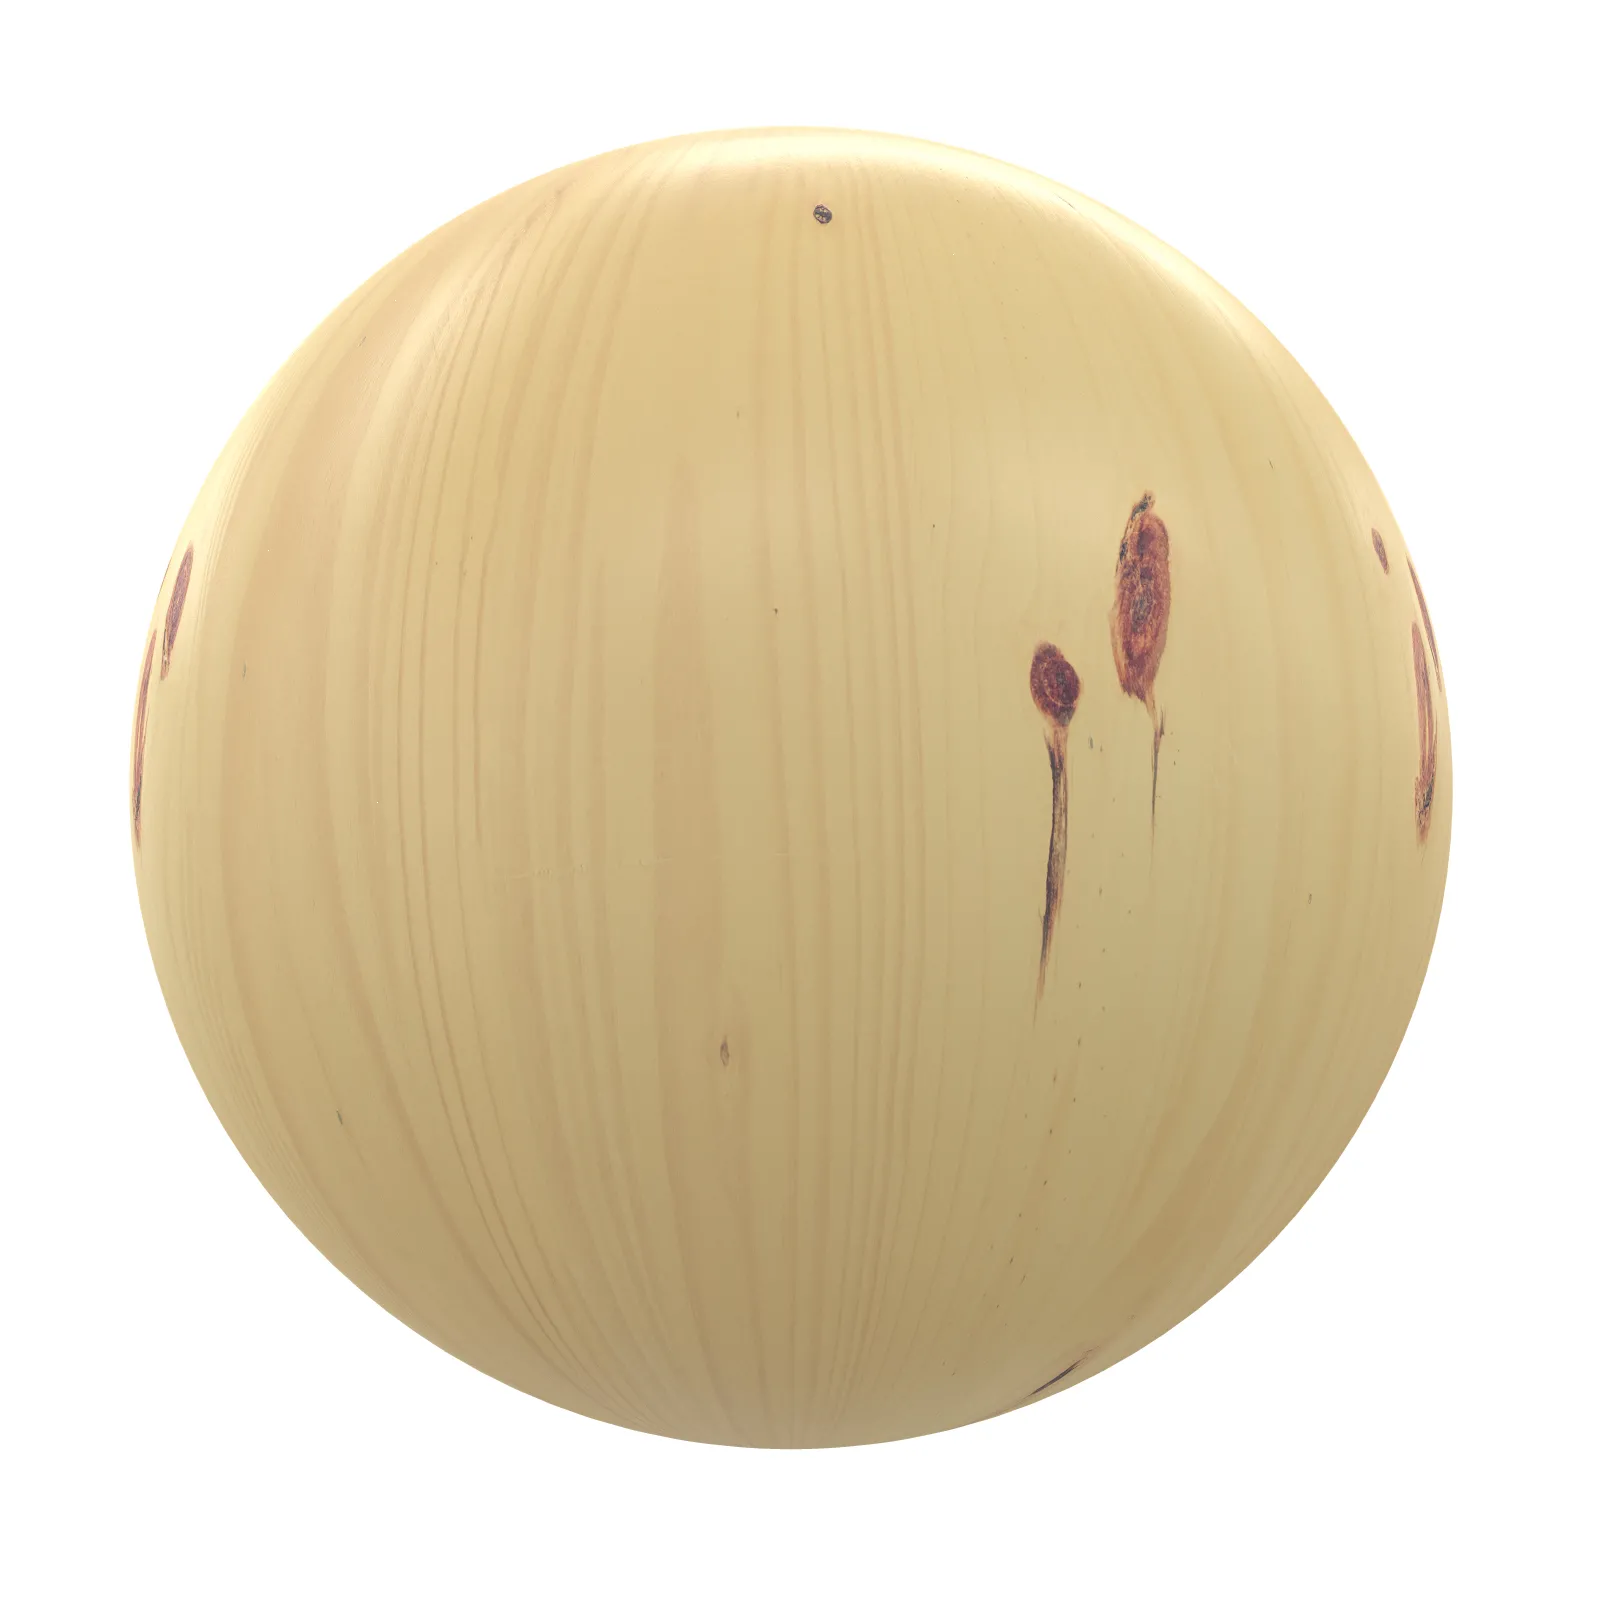 3ds Max Files – Texture – 8 – Wood Texture – 98 – Wood Texture by Minh Nguyen